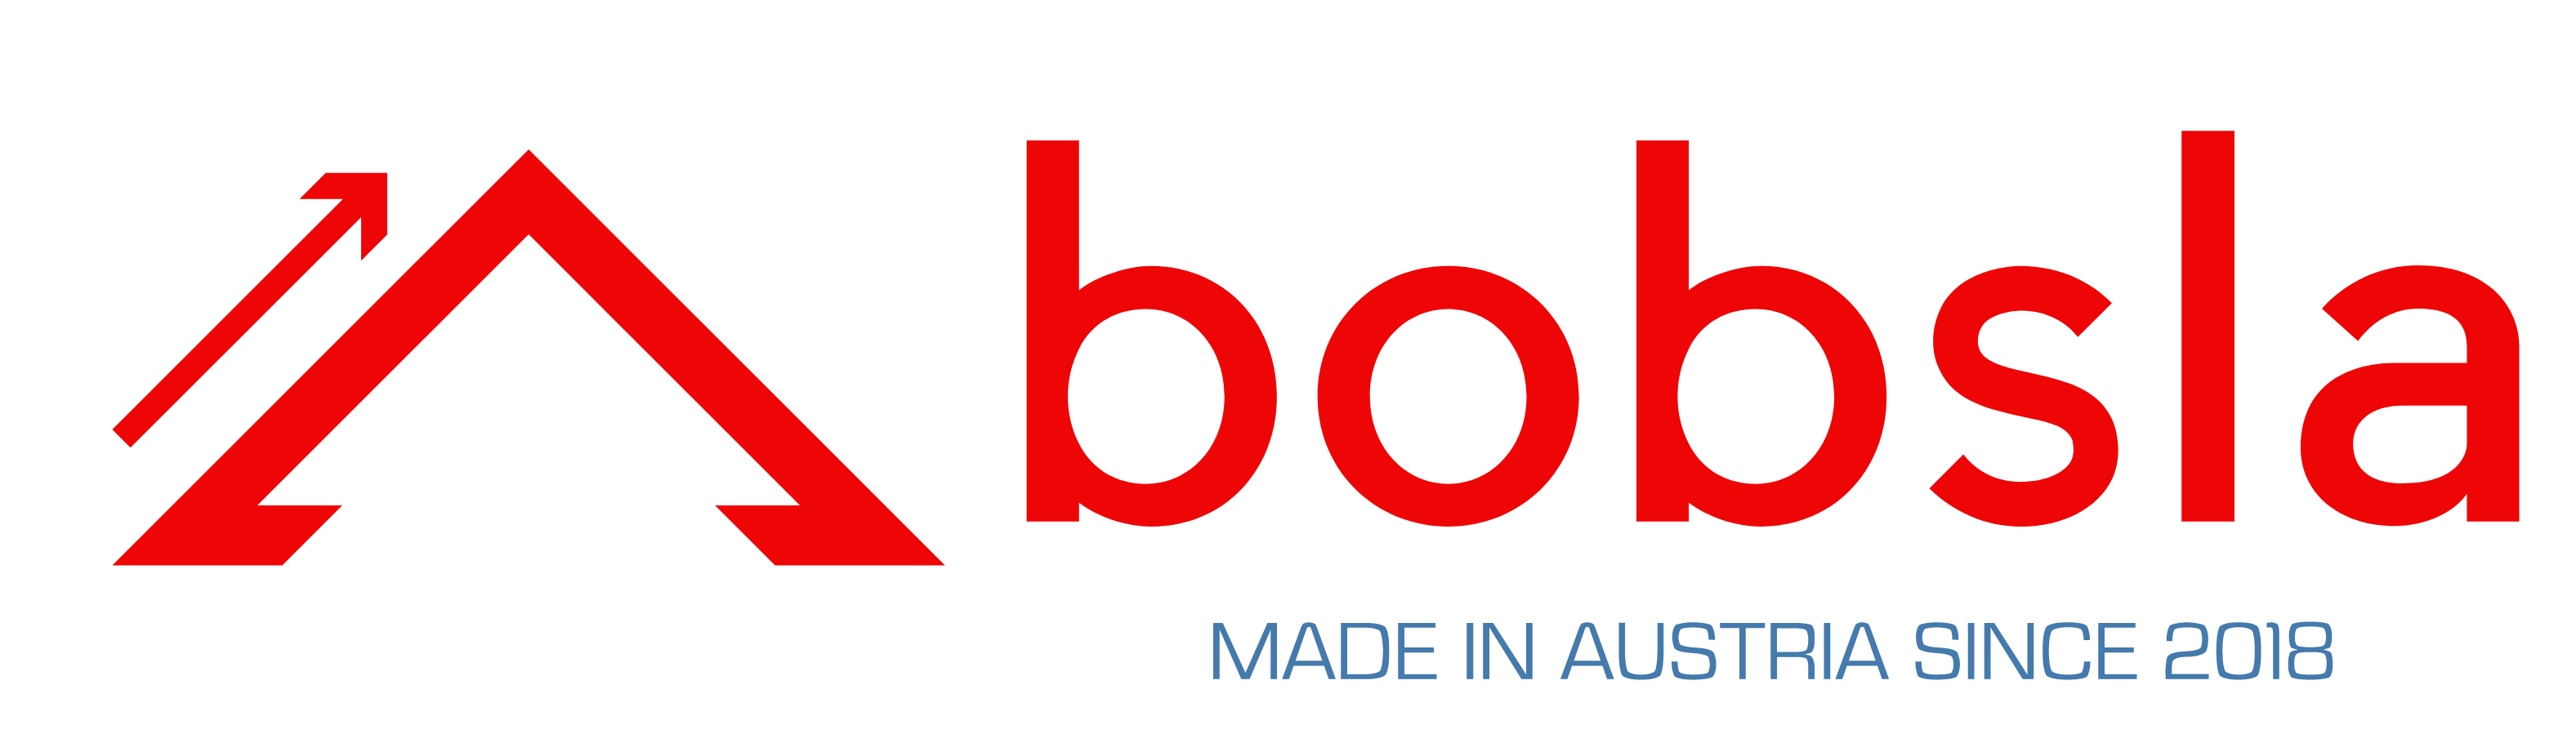 bobsla Logo